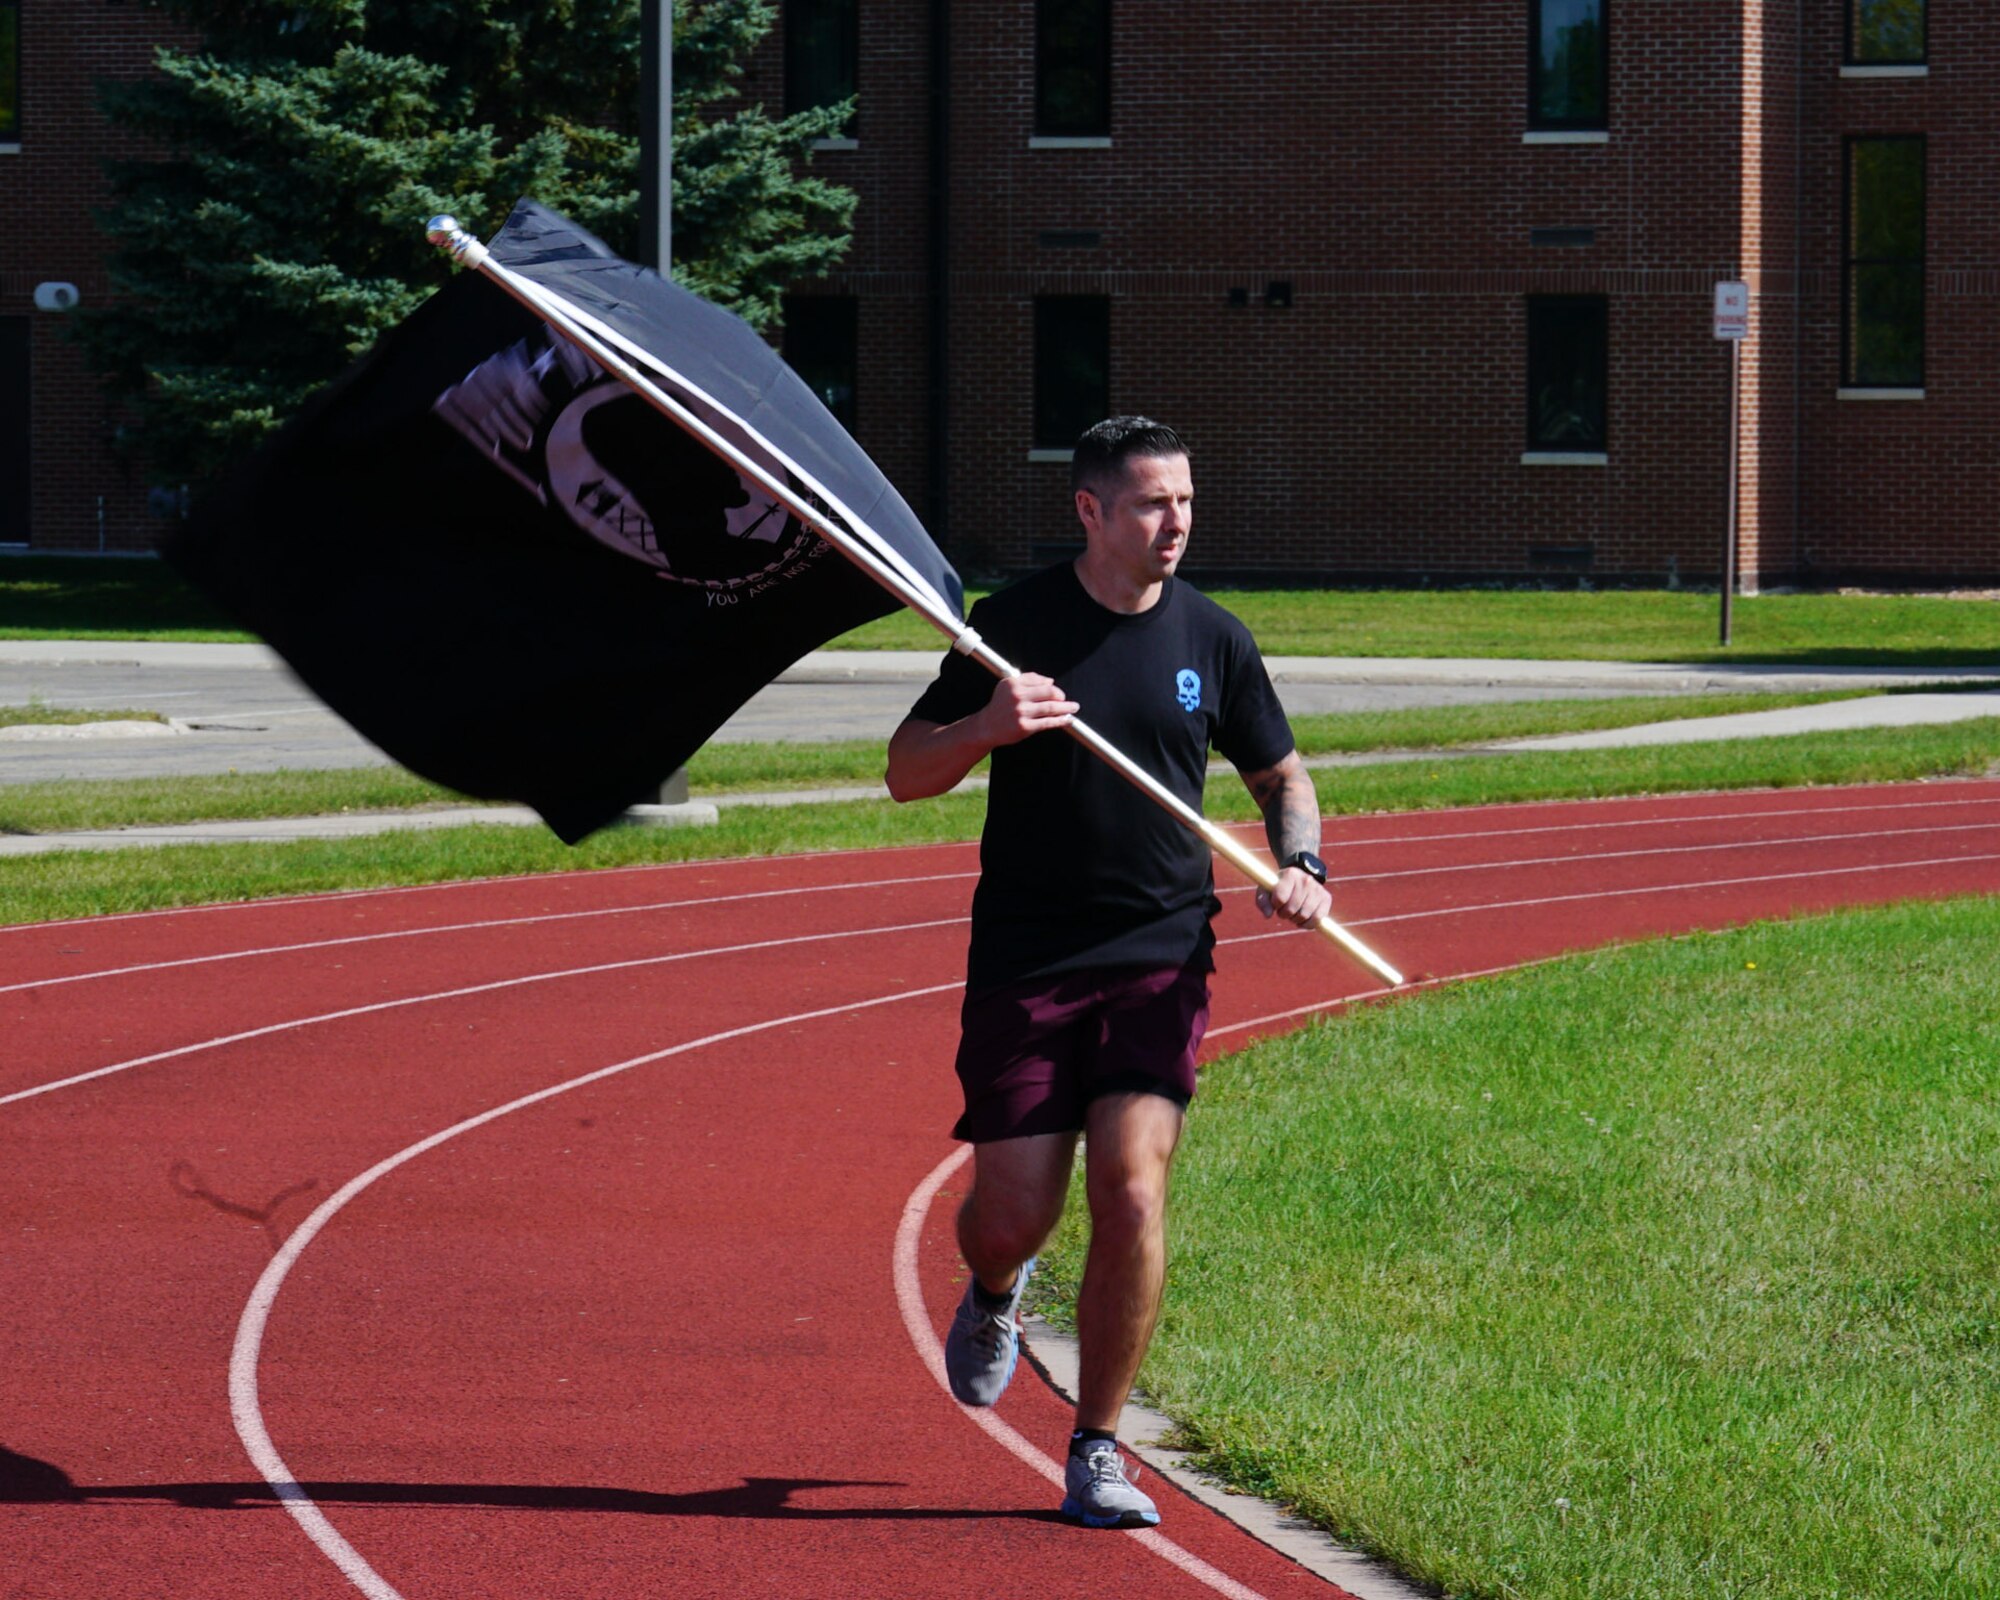 Airman running with the POW/MIA flag.